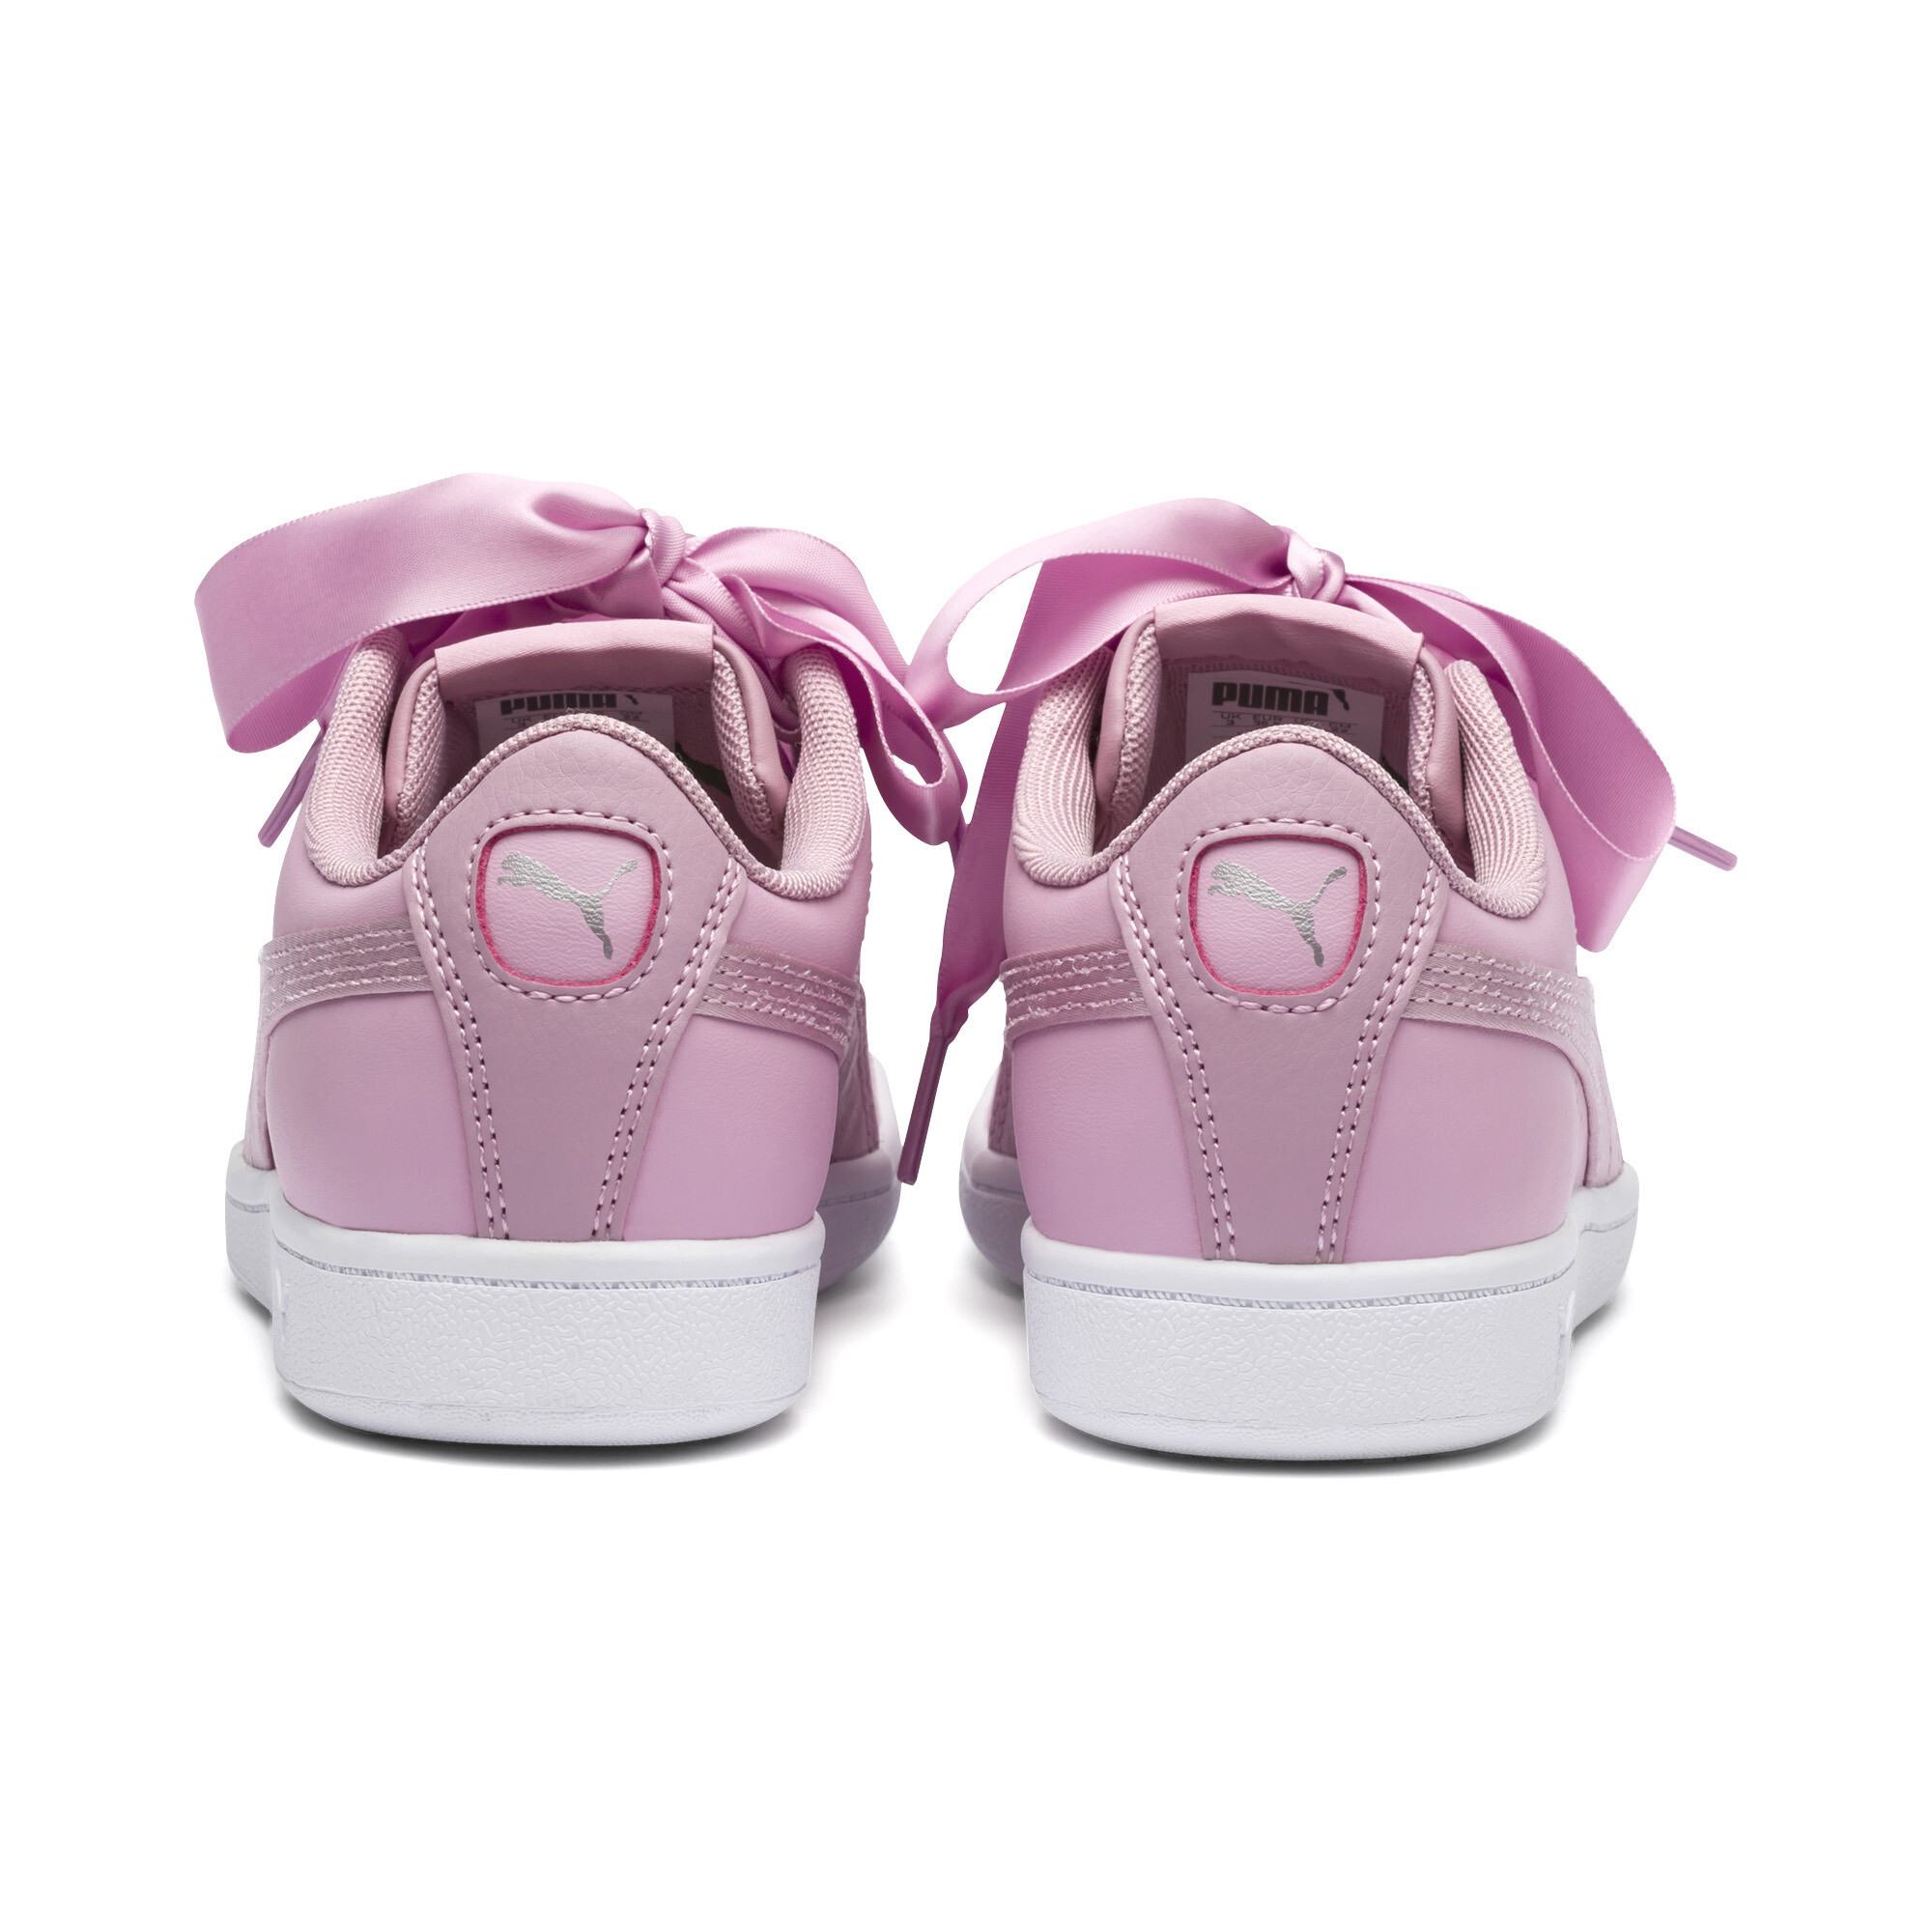 PUMA PUMA Vikky Ribbon Satin Sneakers JR Kids Shoe Kids | eBay